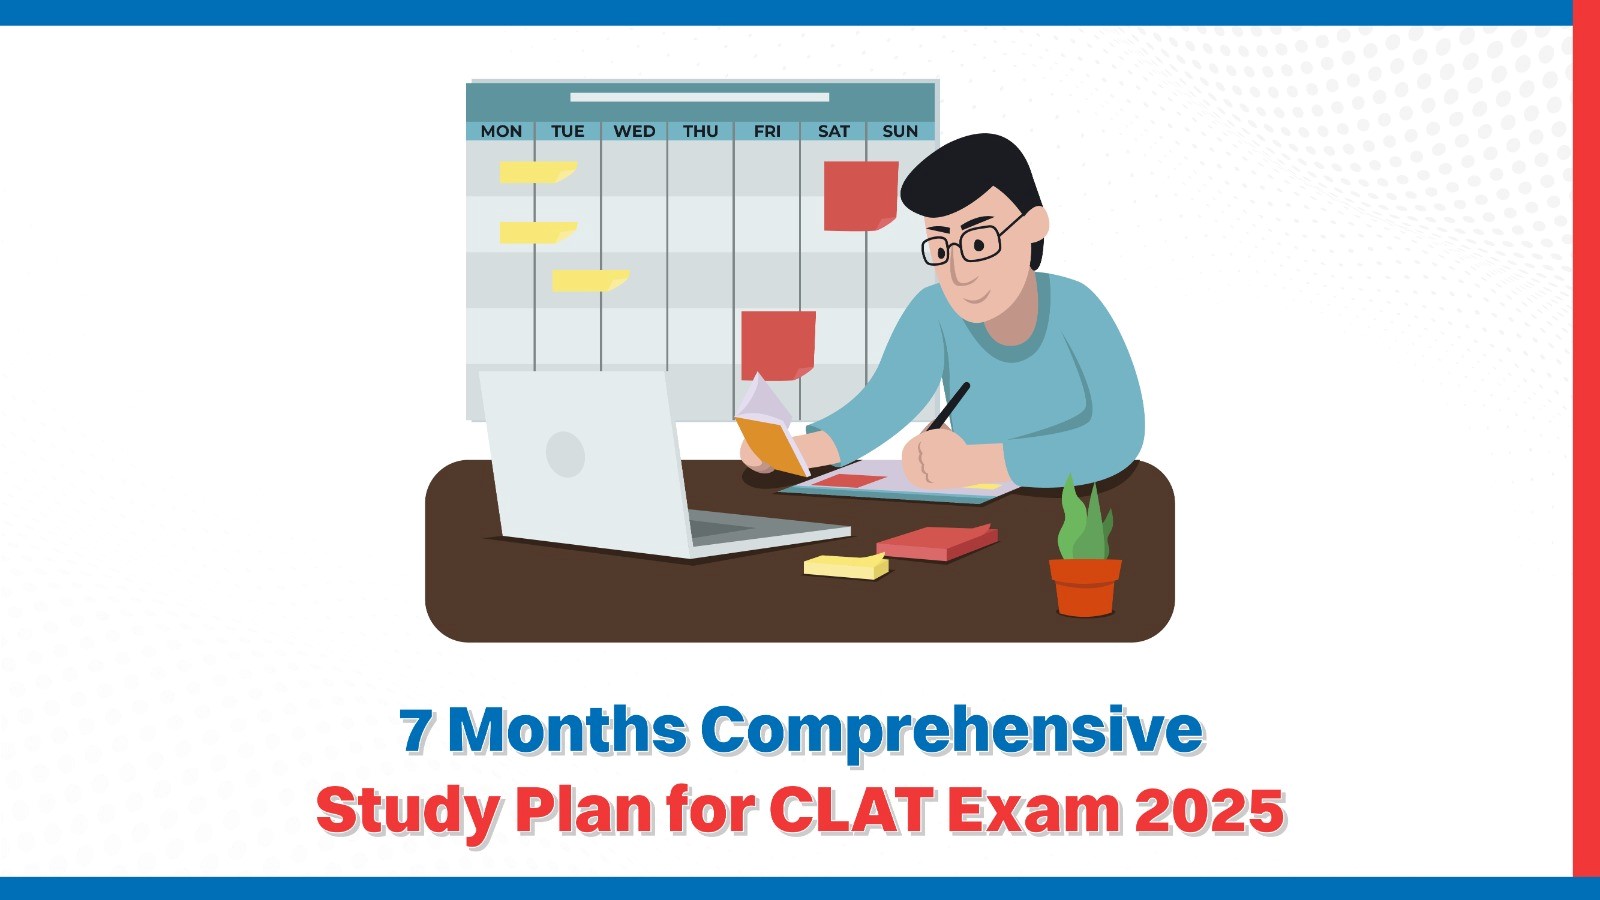 7 Months Comprehensive Study Plan for CLAT Exam 2025.jpg